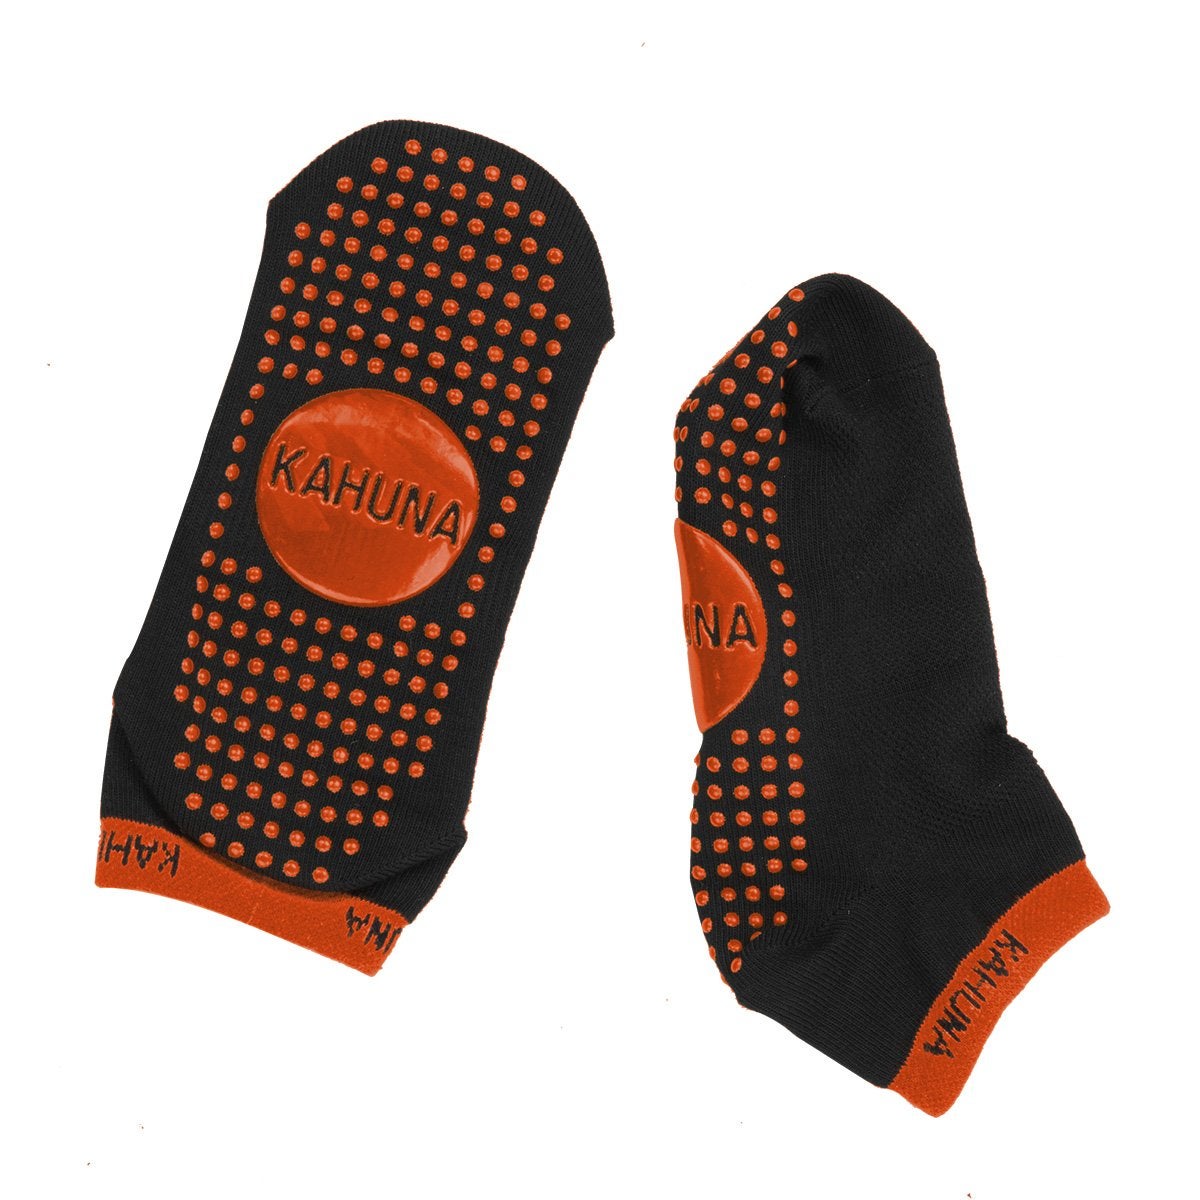 Kahuna Trampoline Kids Safety Anti-Slip Socks Pair - Small